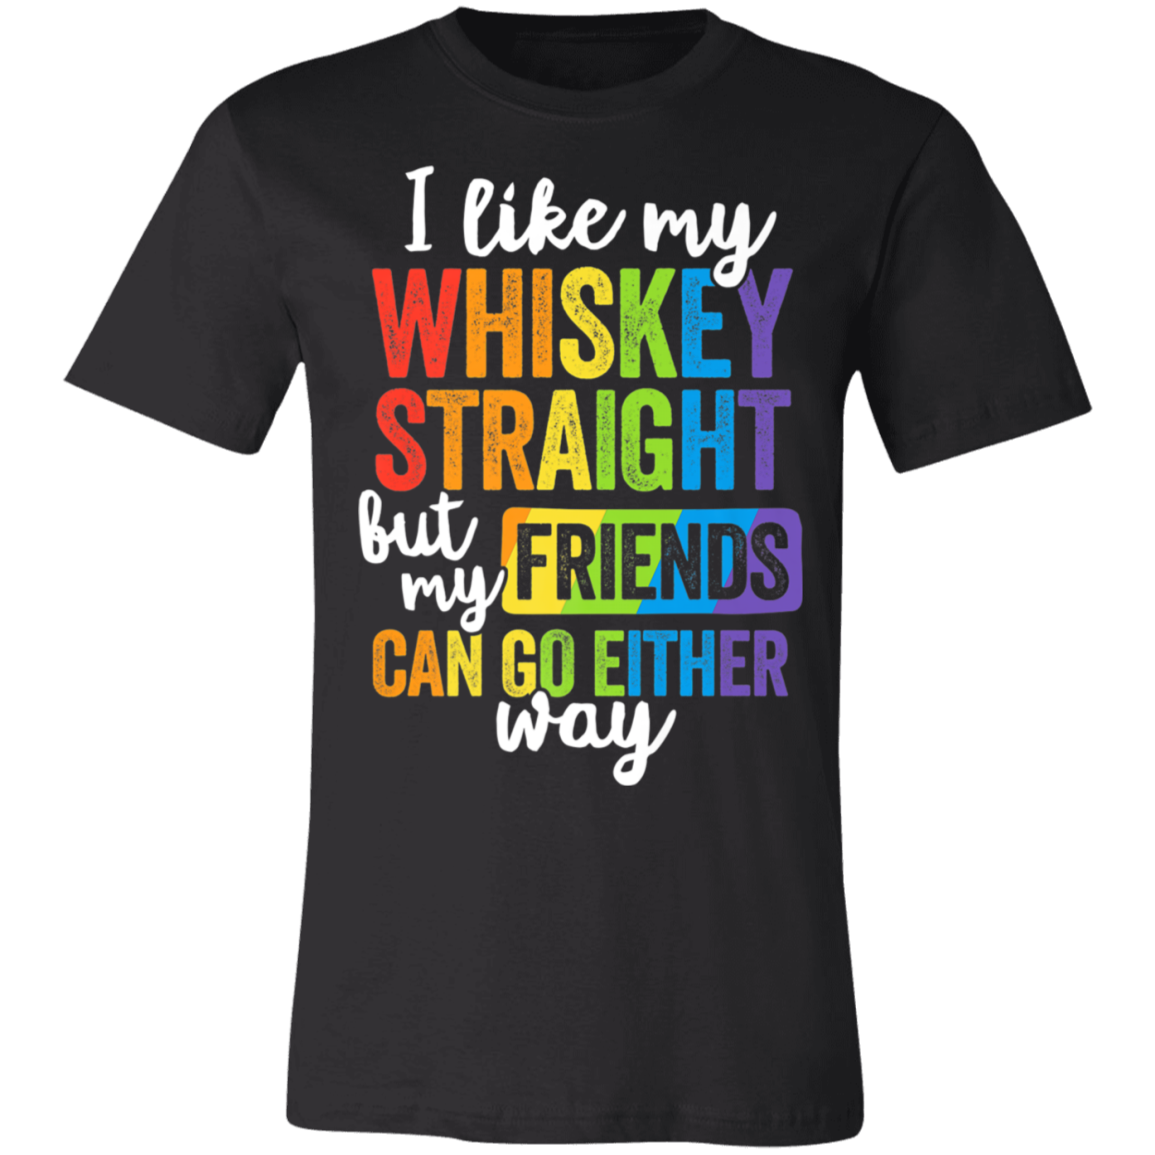 Whiskey Straight #PRIDE Unisex Jersey Short-Sleeve T-Shirt